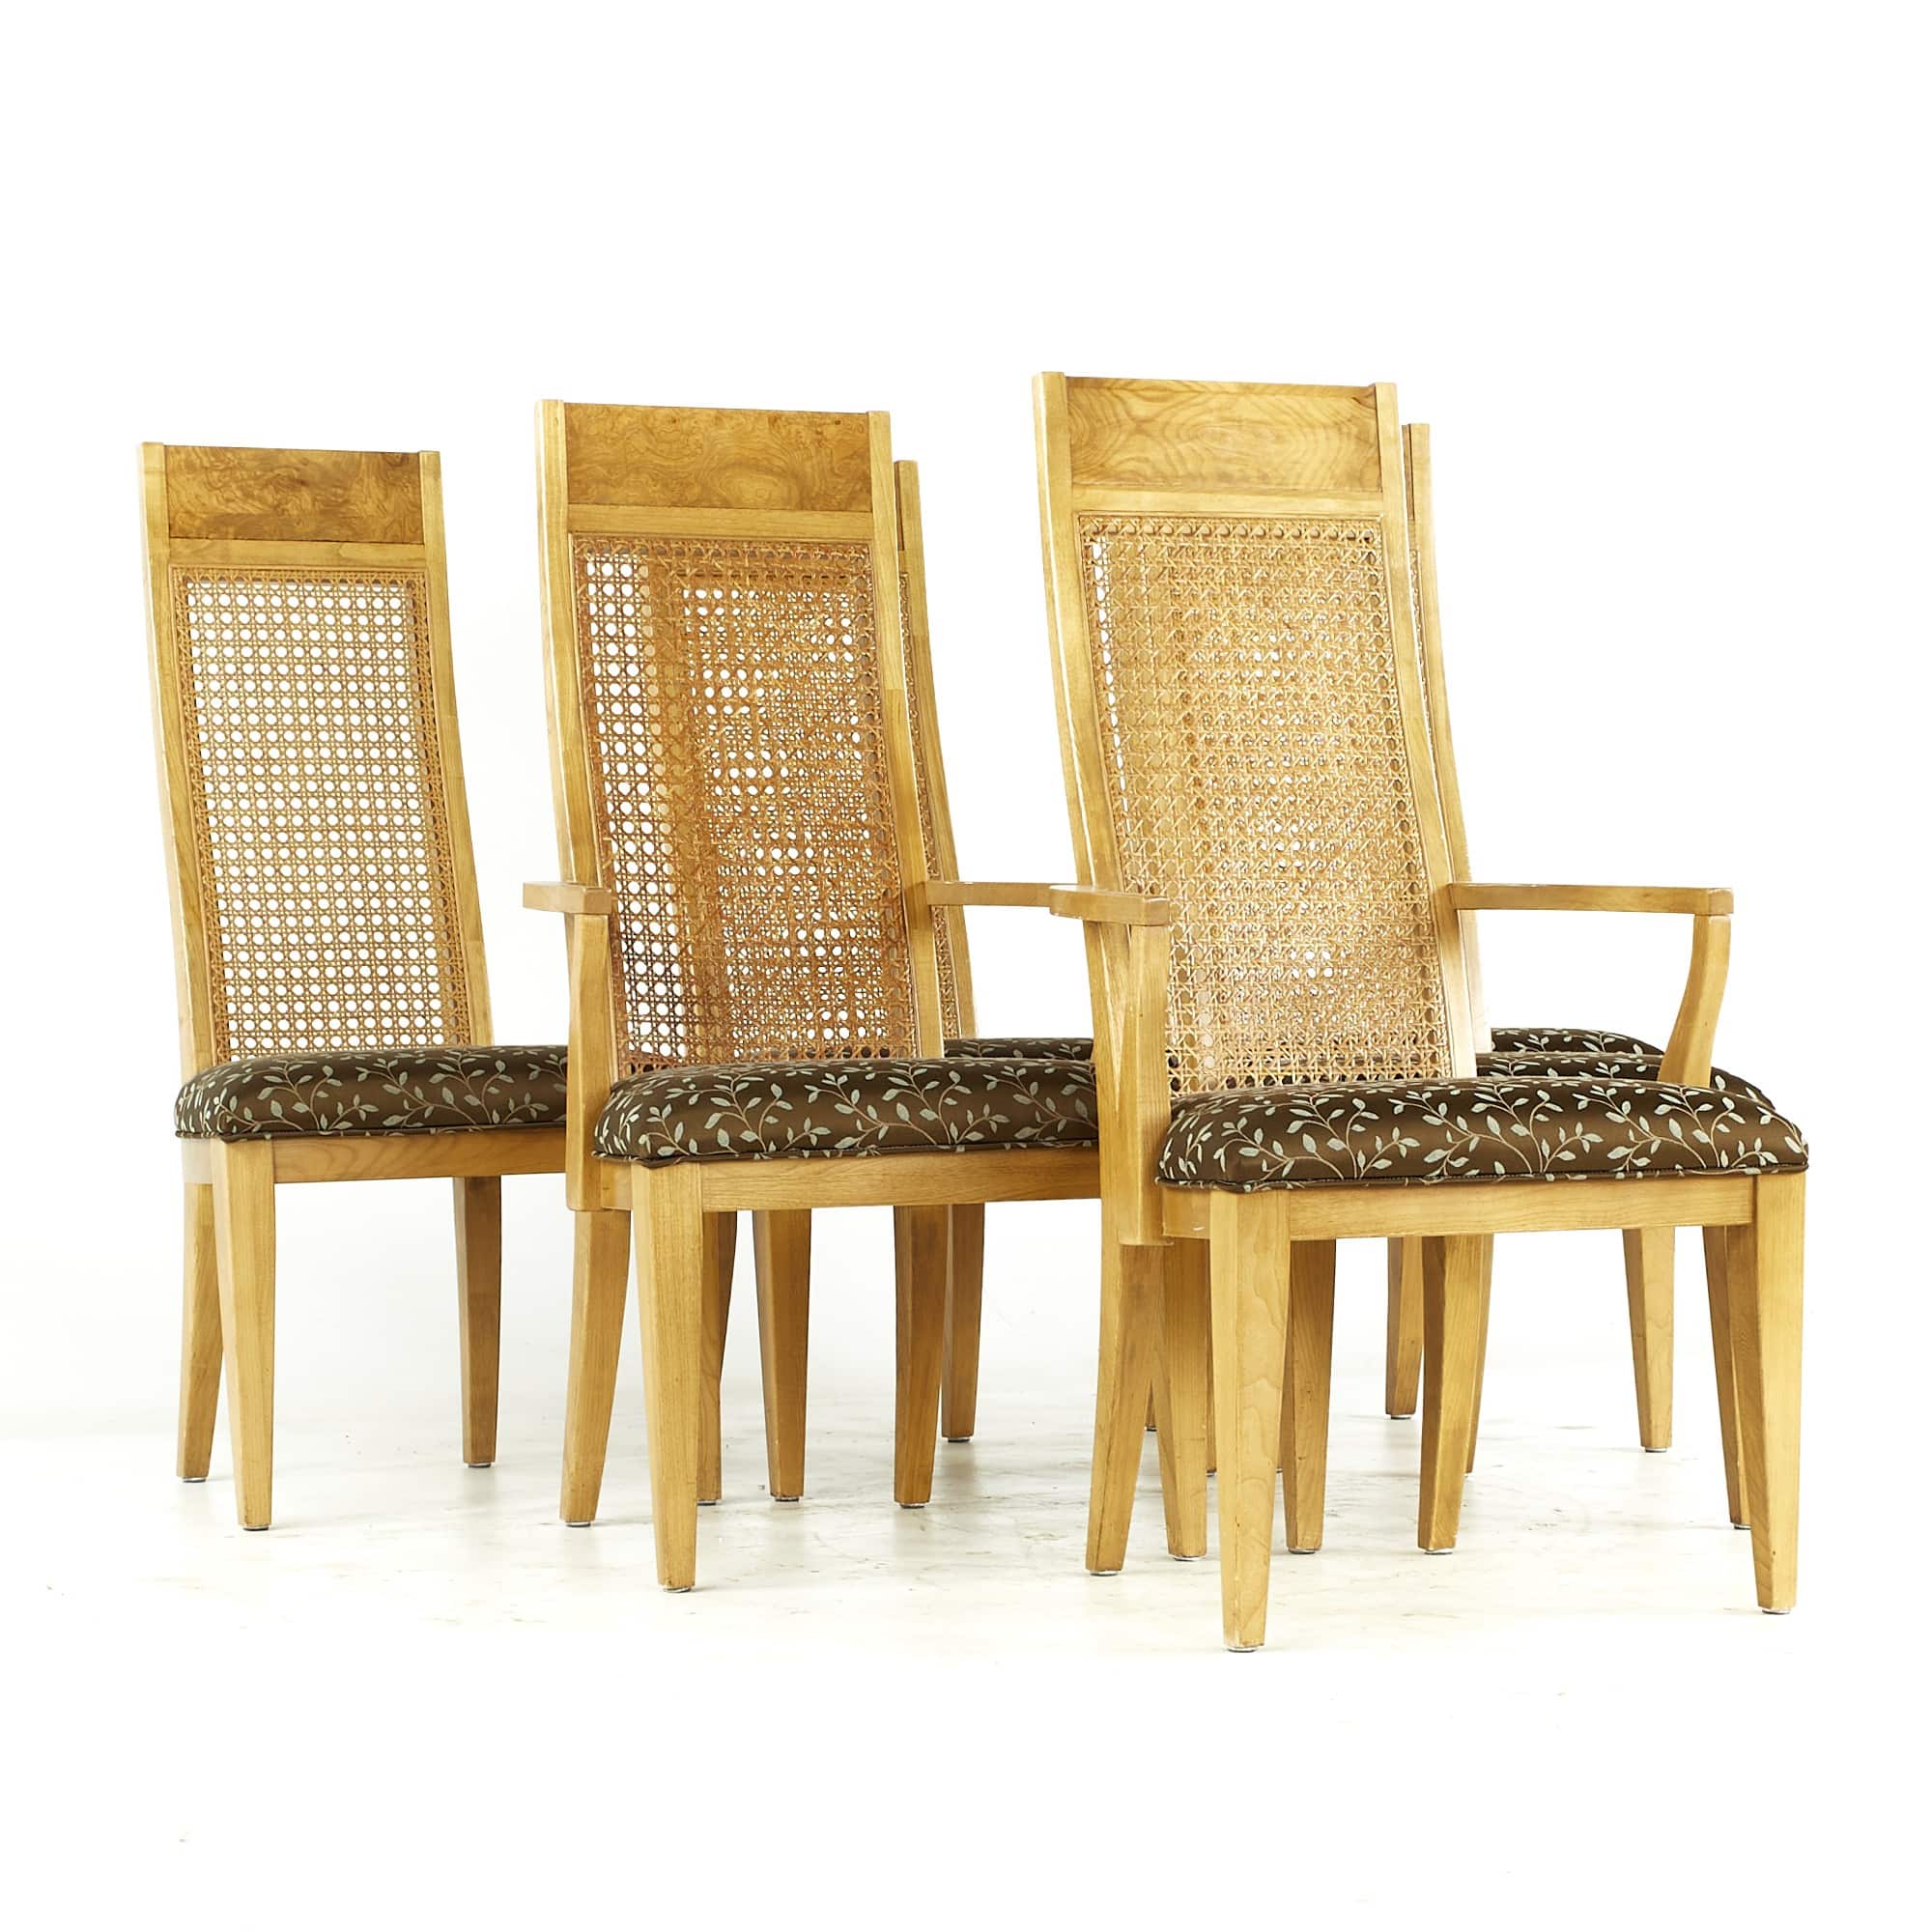 Lane Mid Century Burlwood and Cane Dining Chairs - Set of 6